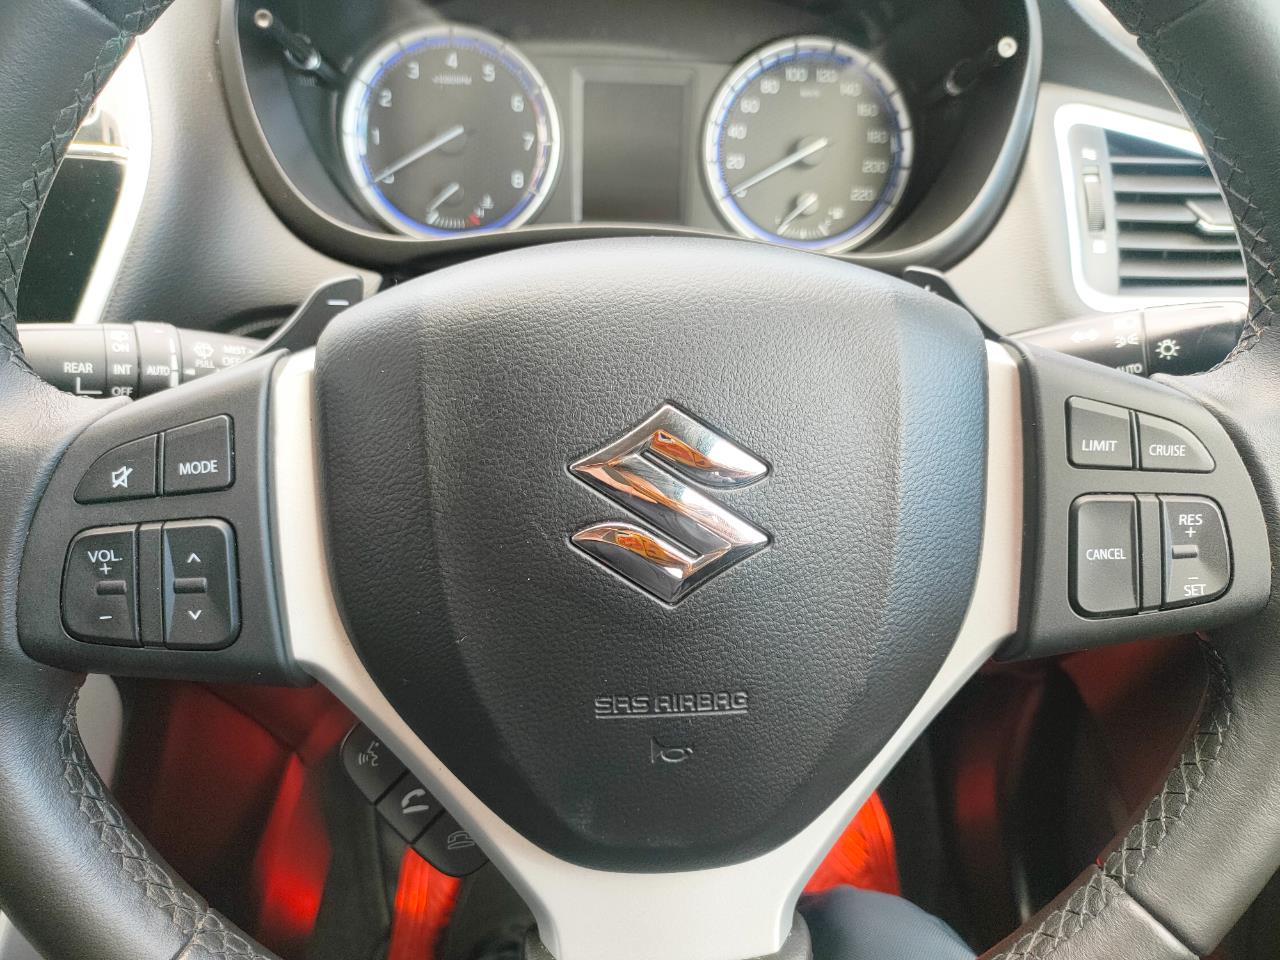 2019 Suzuki S-Cross